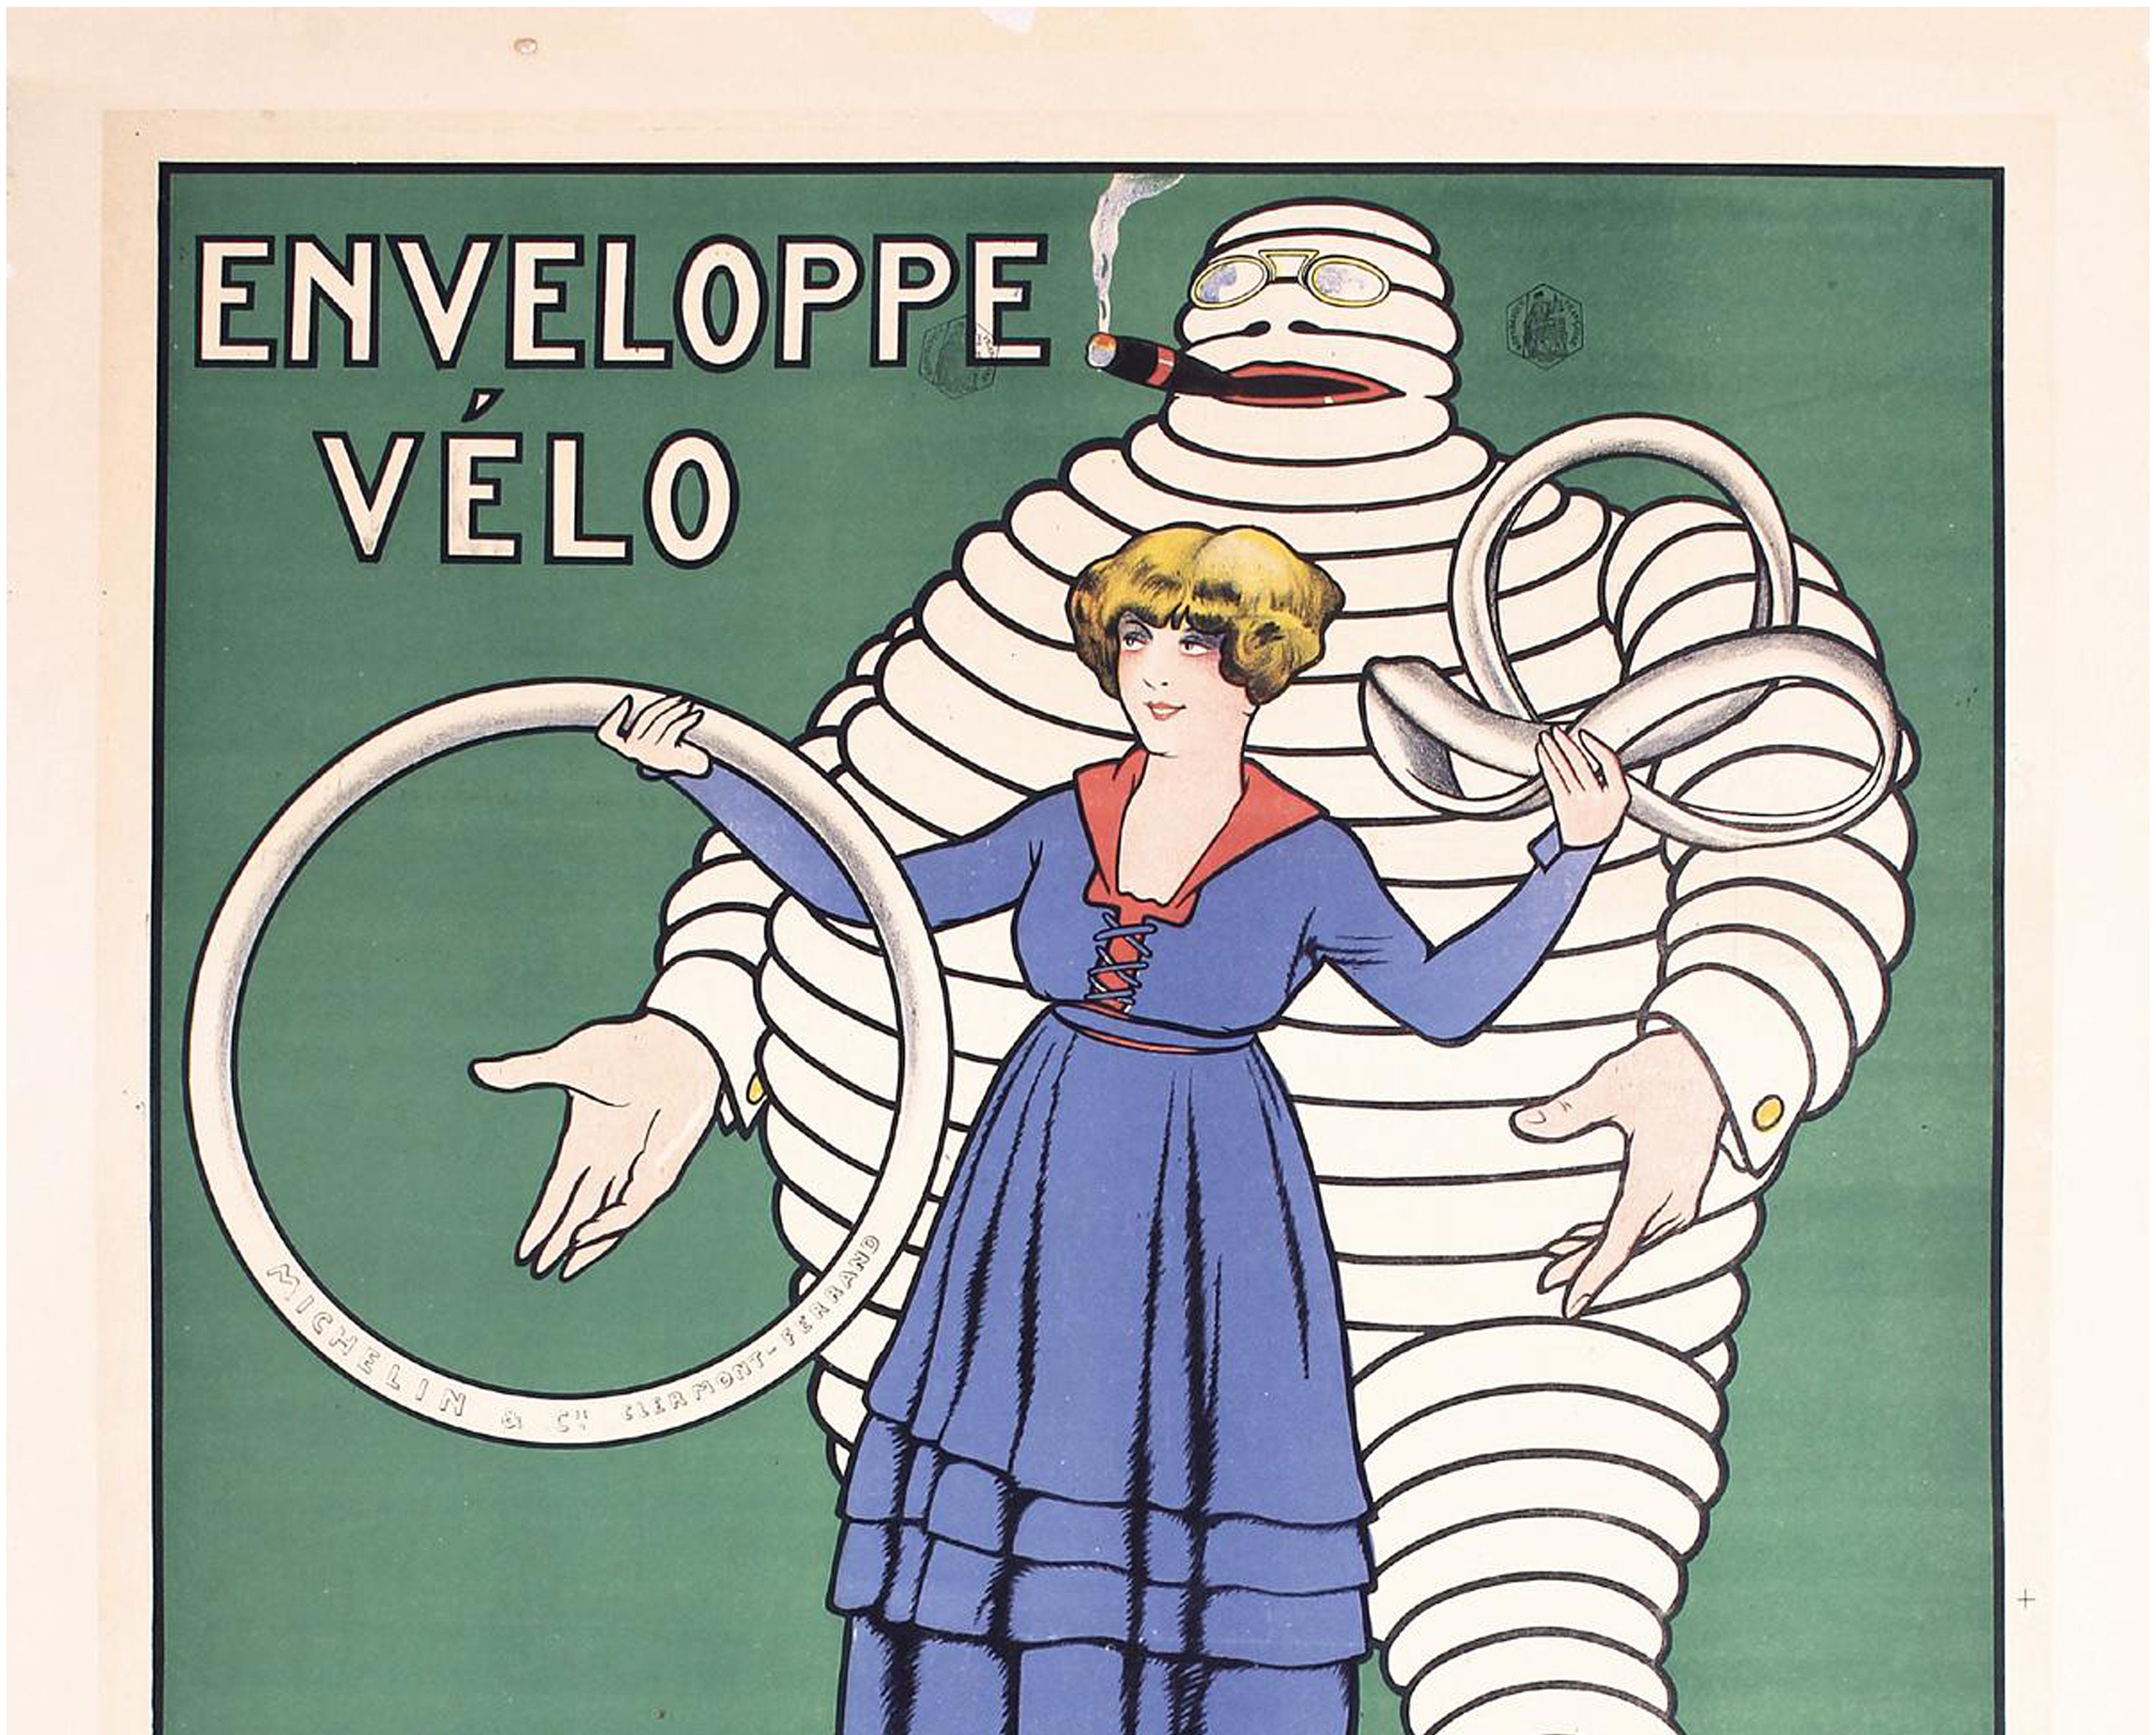 A Rare 'Michelin Enveloppe Velo' Advertising Poster, French (1916